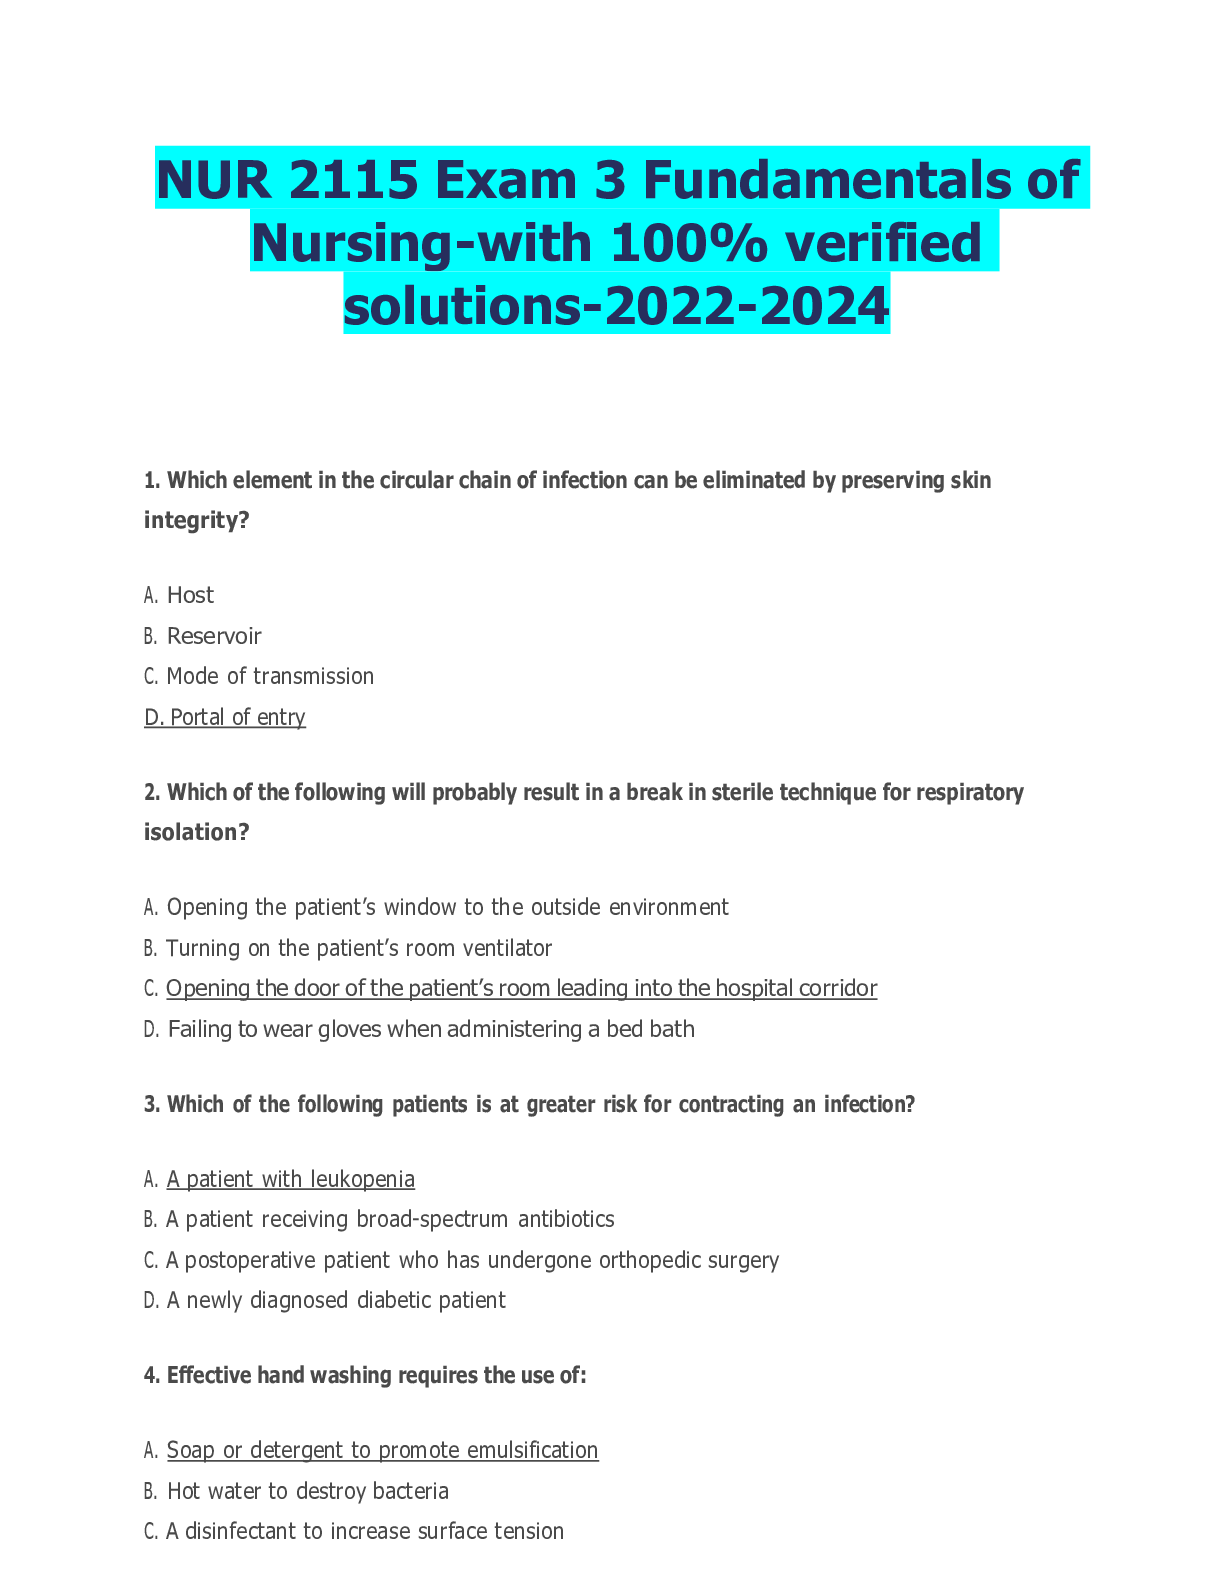 NUR 2115 Exam 3 Fundamentals of Nursingwith 100 verified solutions